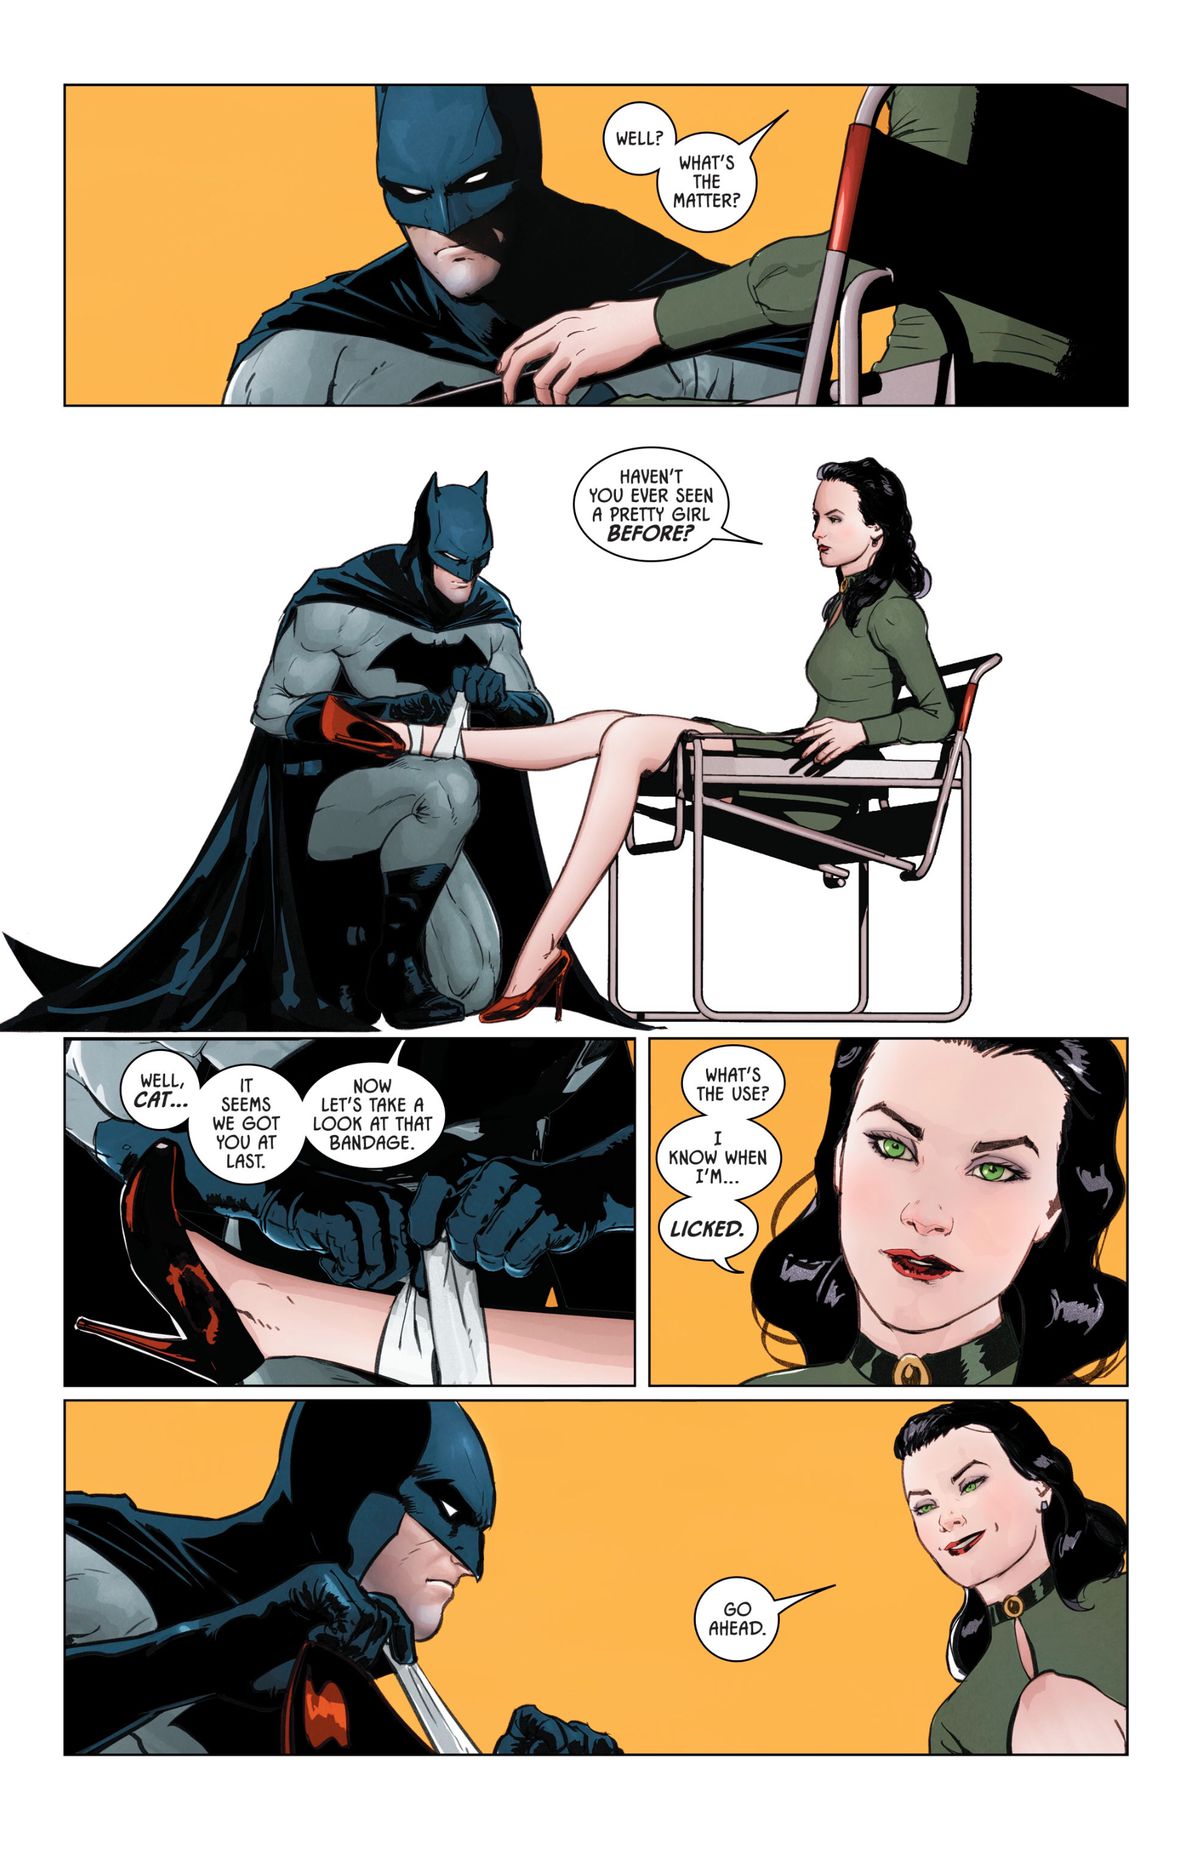 Batman and Catwoman in Batman #44 (2018) with dialogue referencing Batman #1 (1940), DC Comics. 